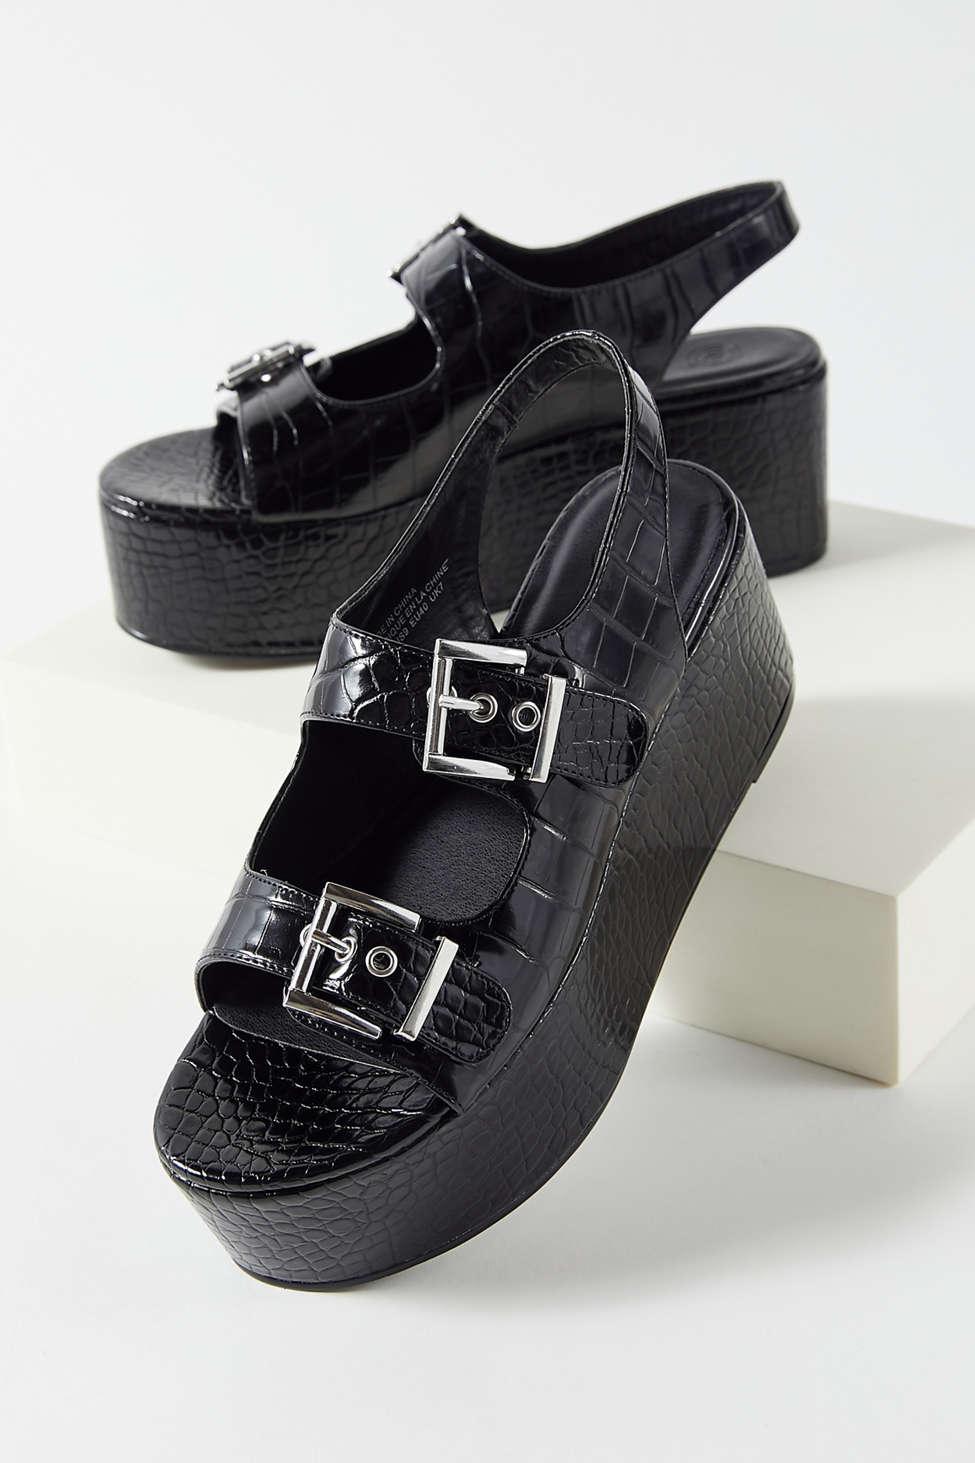 Urban Outfitters Uo Harper Buckle Platform Sandal | Lyst